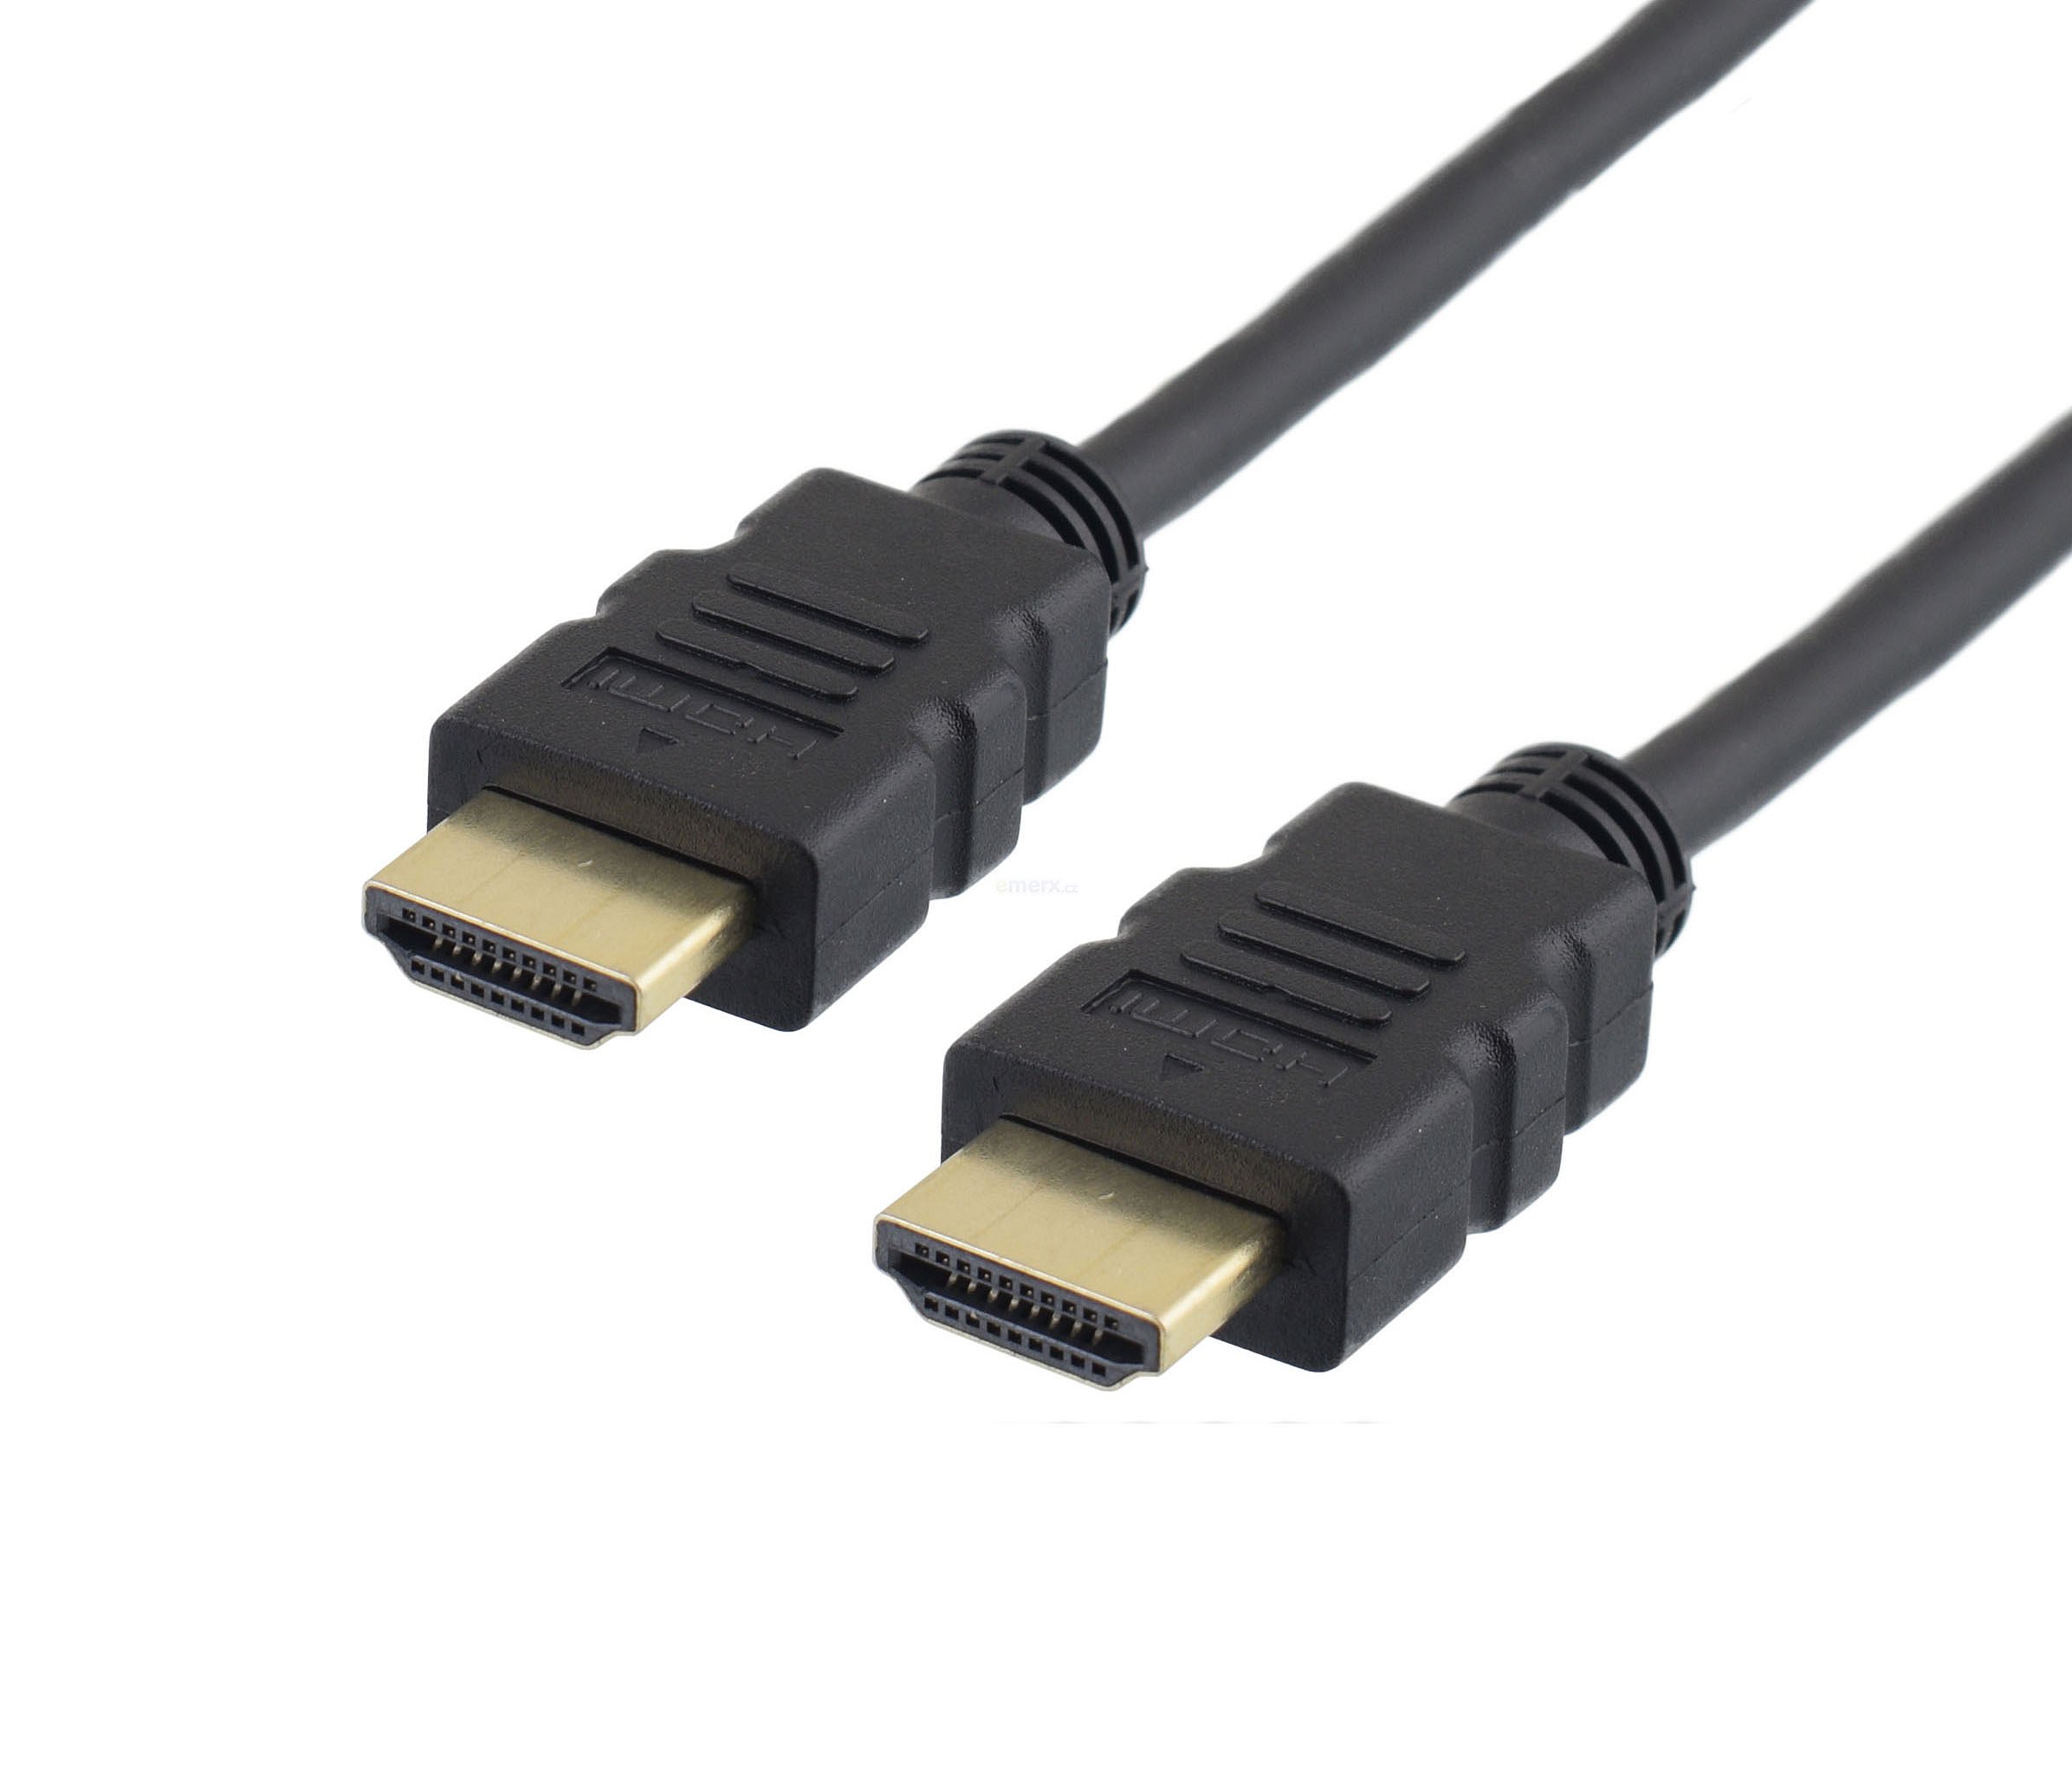 Propojovací kabel  HDMI 1.4 na HDMI 1.4, délka 3m (HS-101-3)